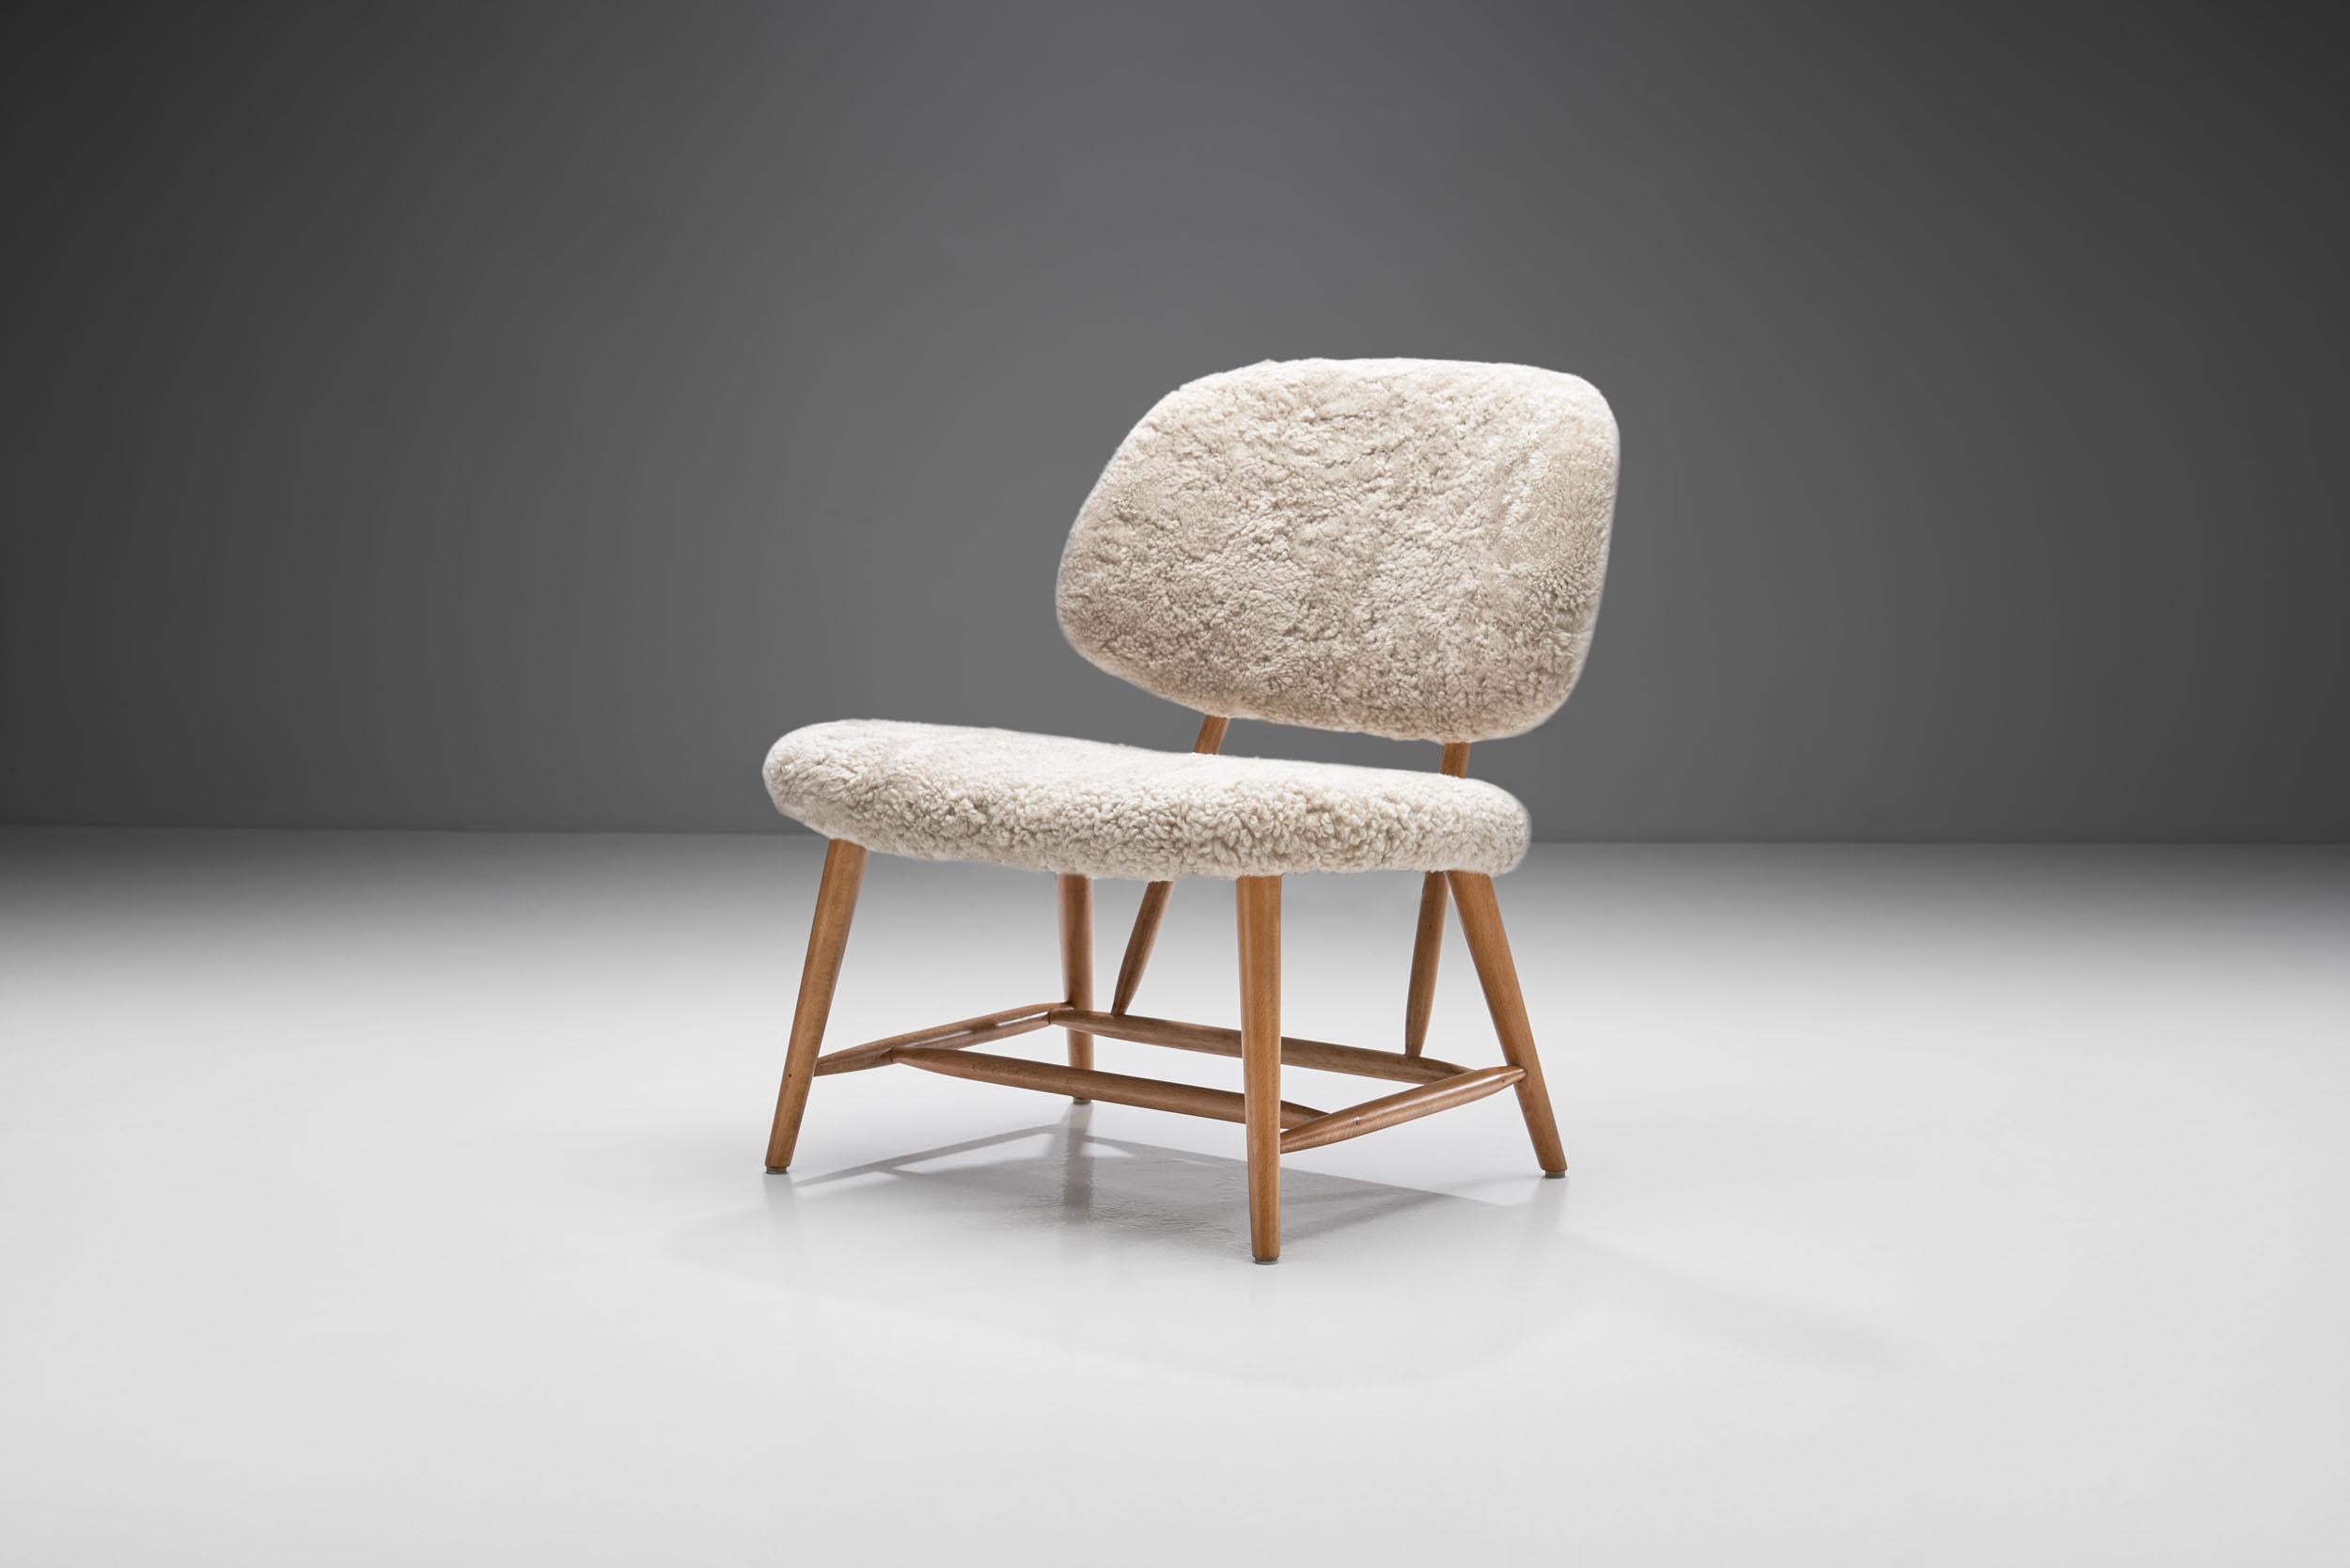 Mid-20th Century Alf Svensson “TeVe” Chair for Studio Ljungs Industrier AB, Sweden 1950s For Sale